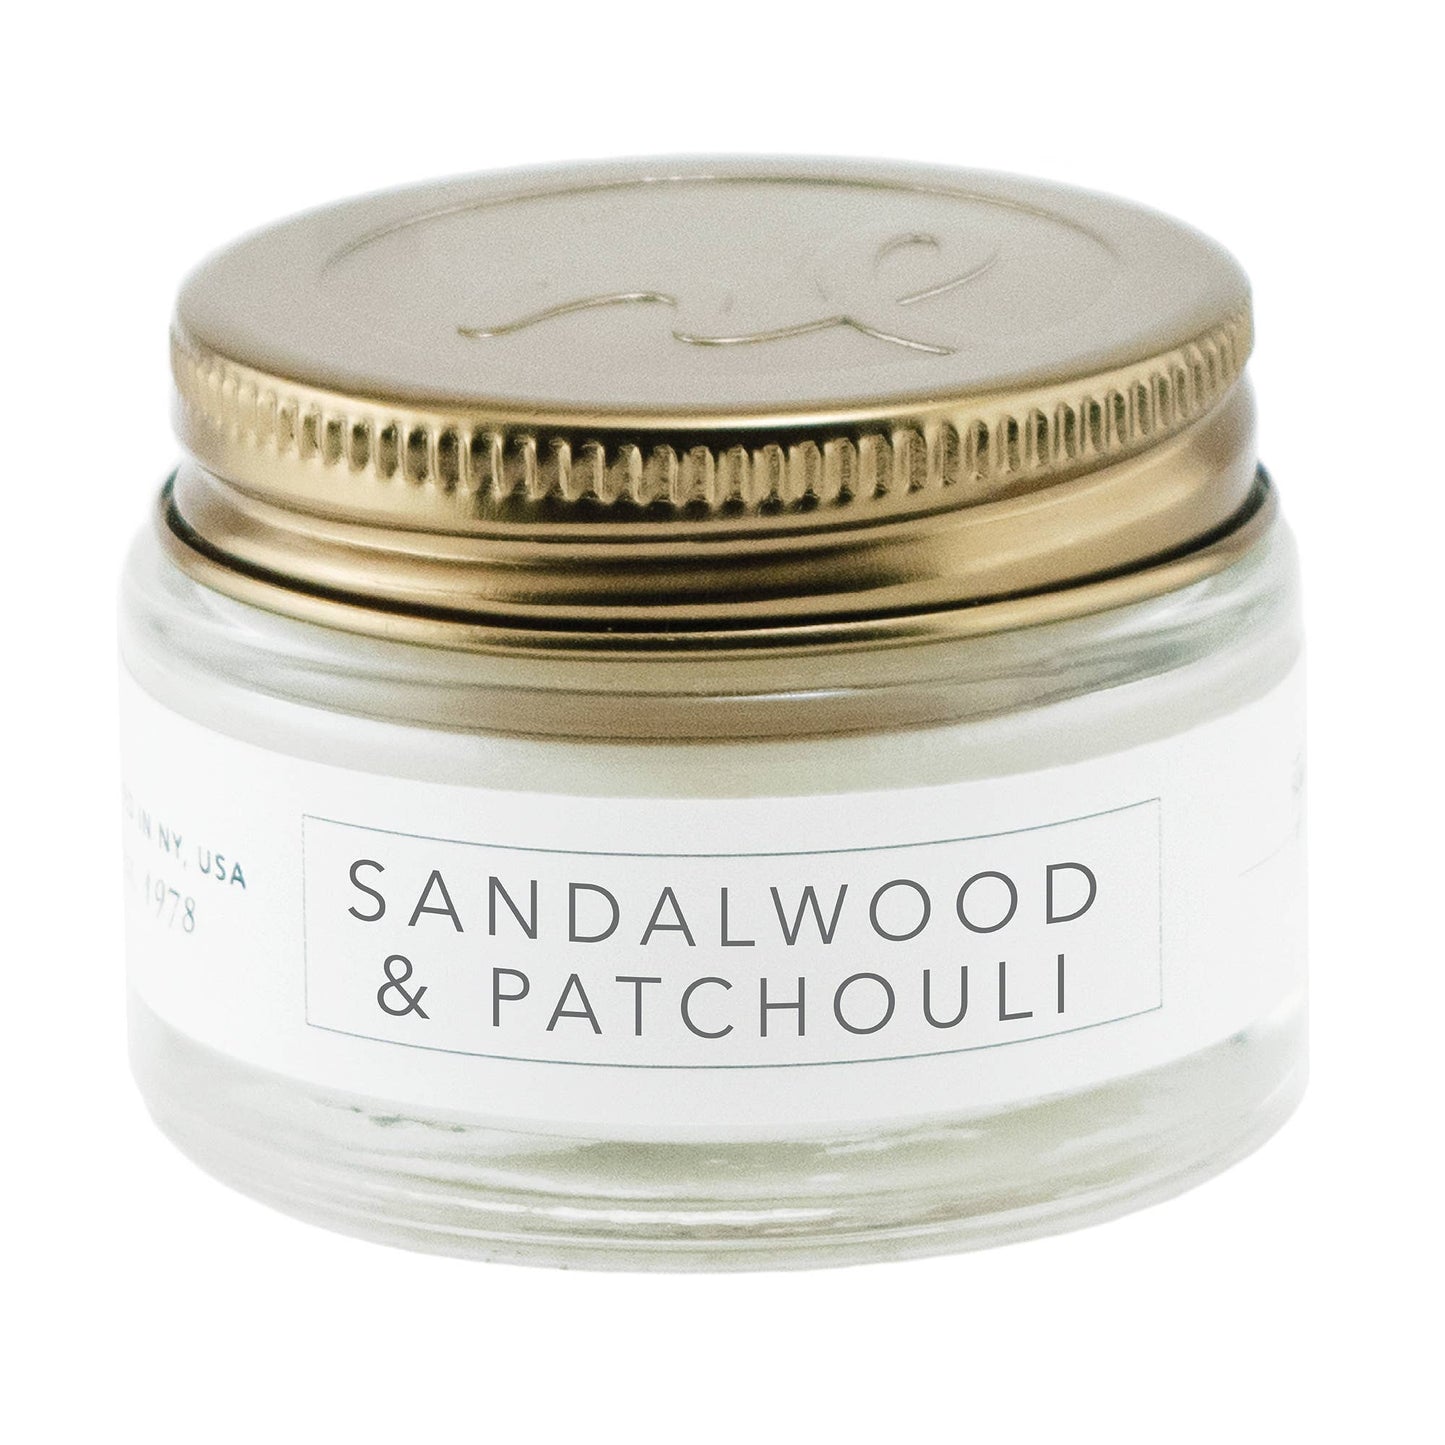 1 oz Candles: Sandalwood & Patchouli